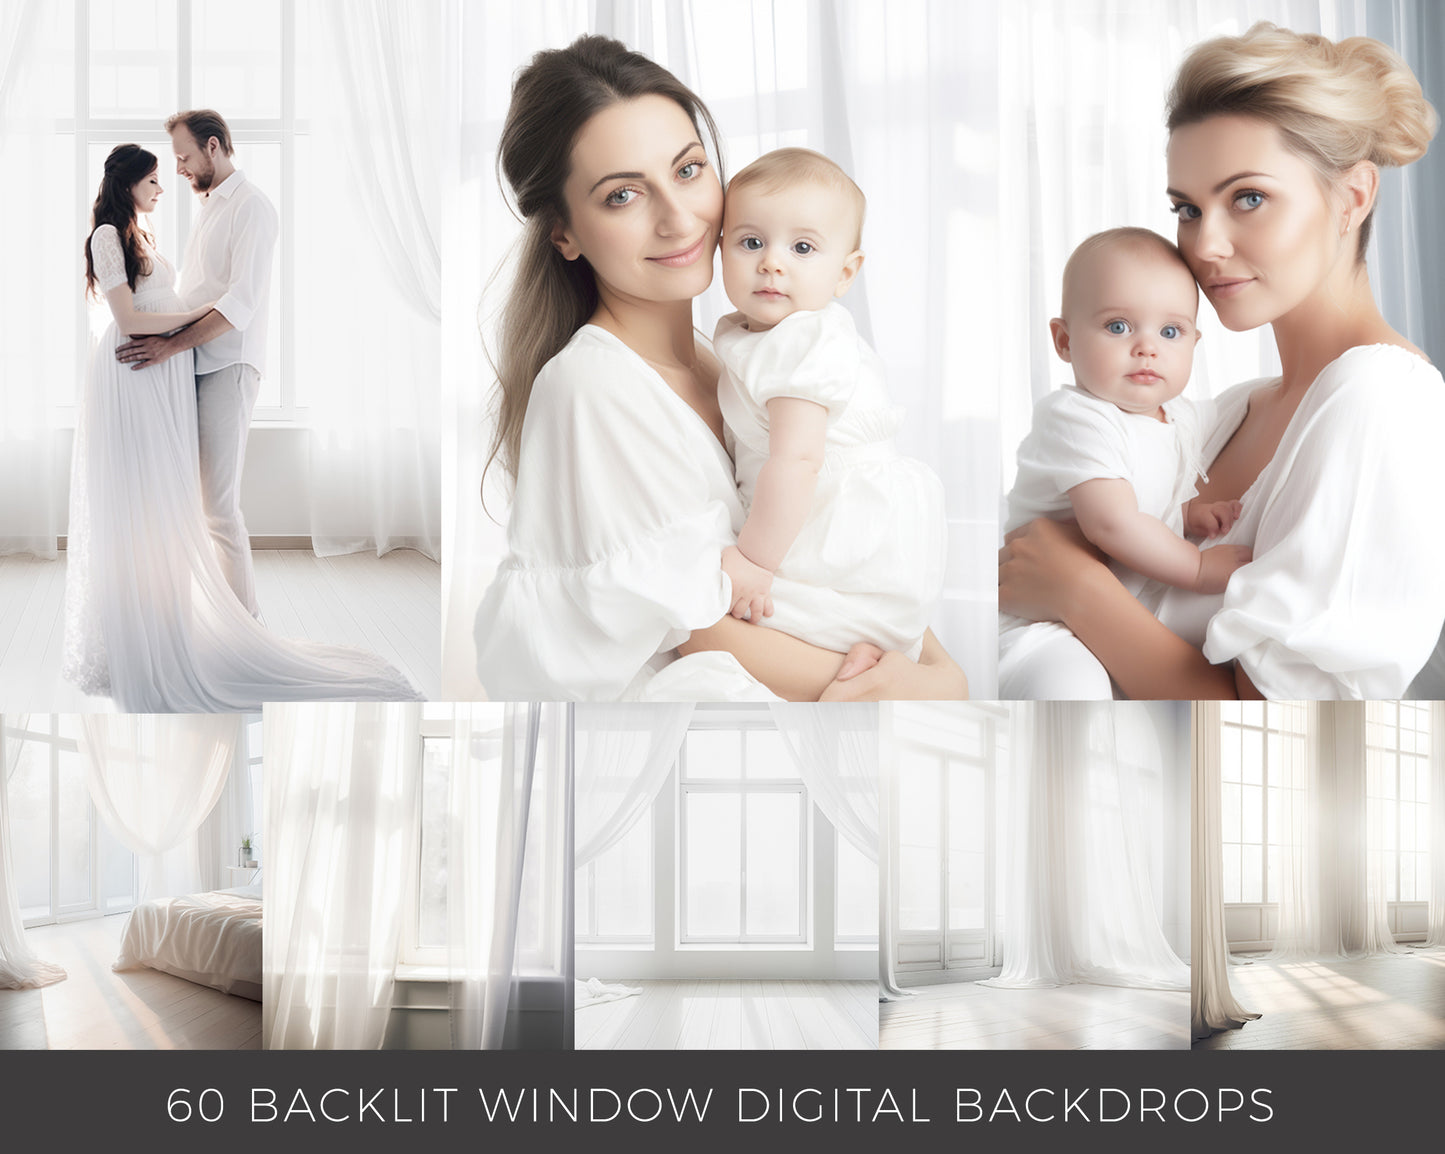 60 Backlit Window Digital Backdrops